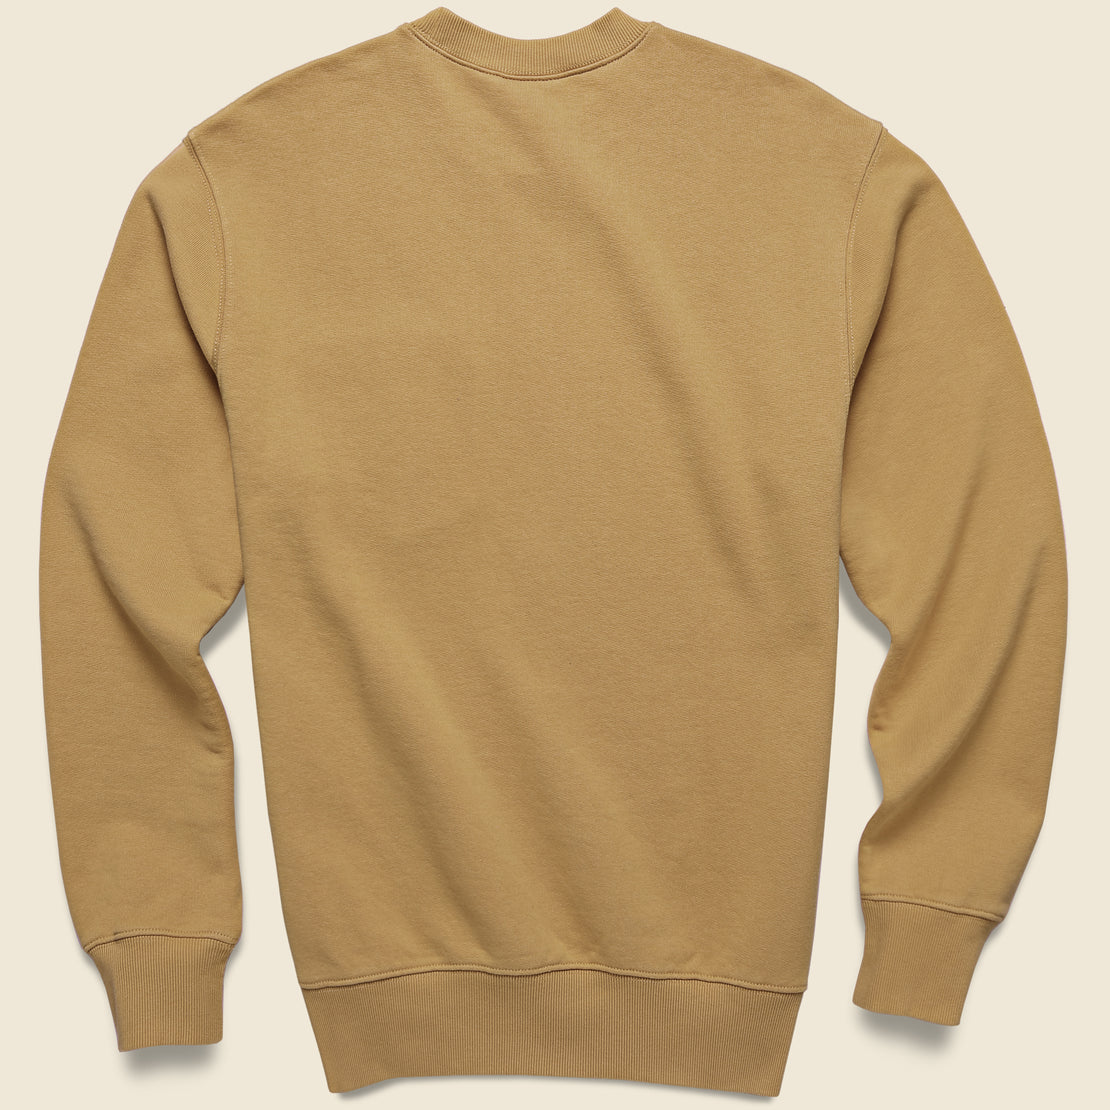 Pocket Sweatshirt - Jasper - Carhartt WIP - STAG Provisions - Tops - Fleece / Sweatshirt